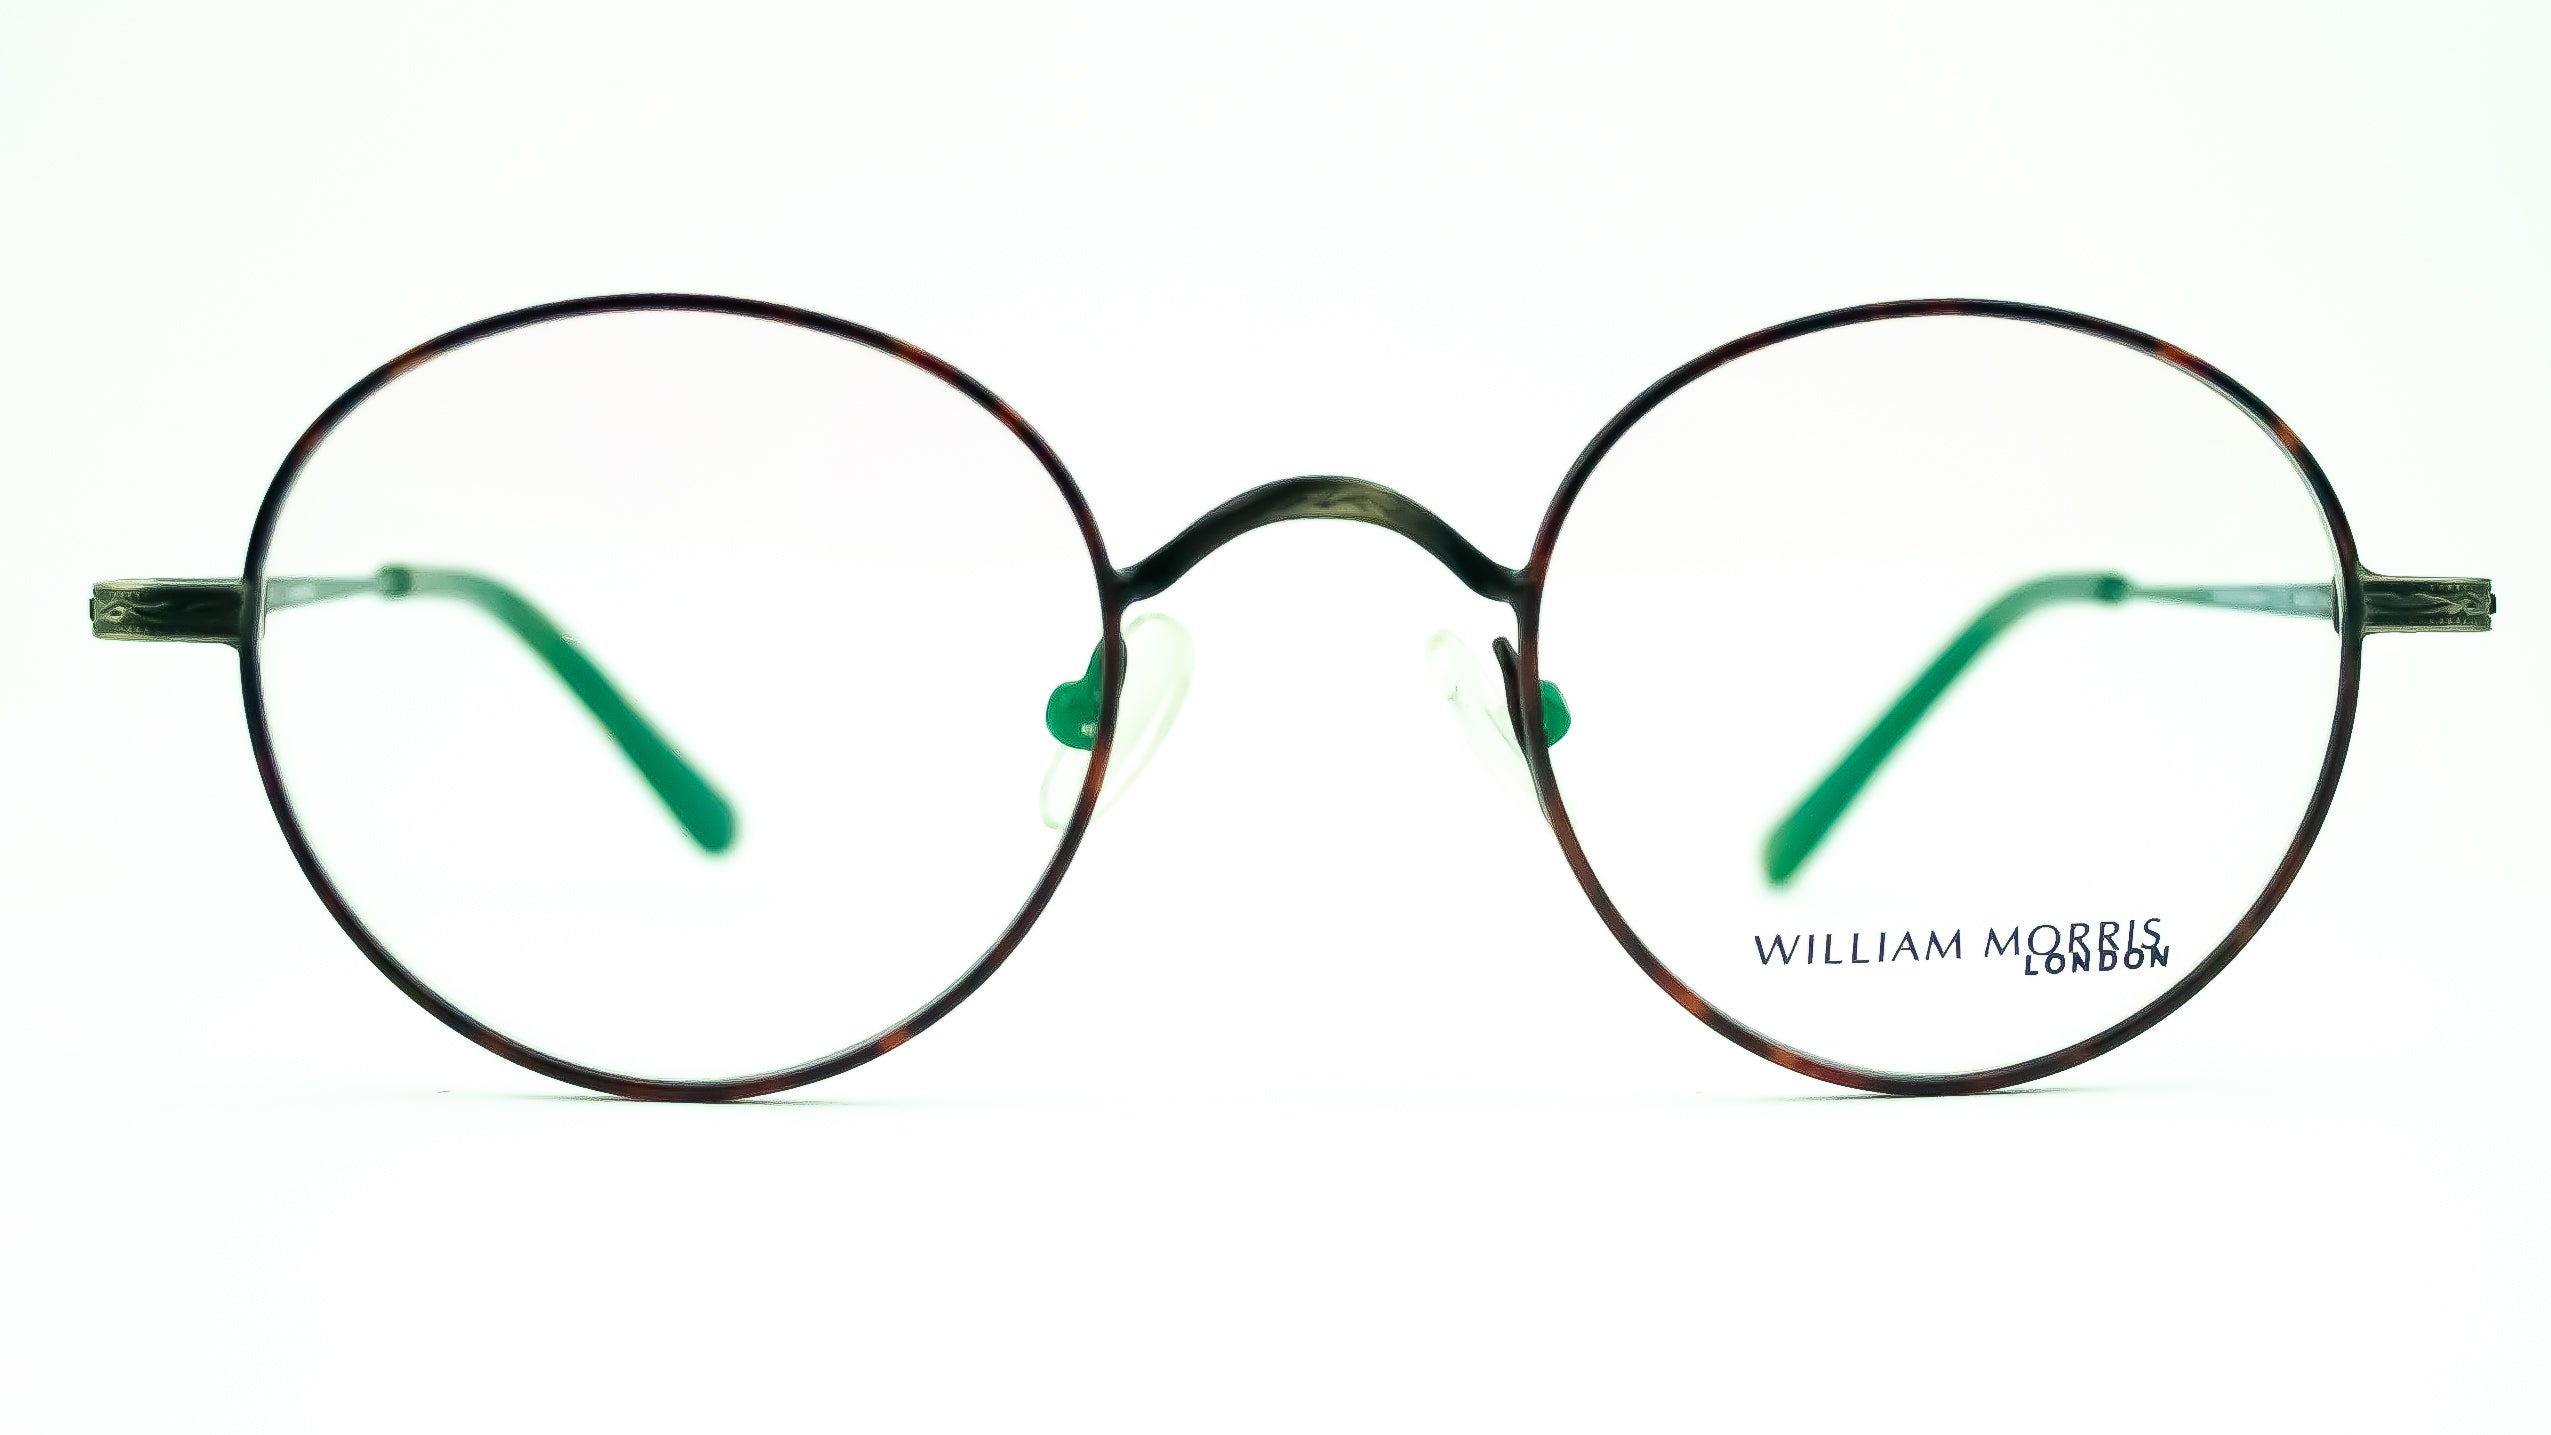 William Morris London 6959 Brown Round Vintage Style Glasses